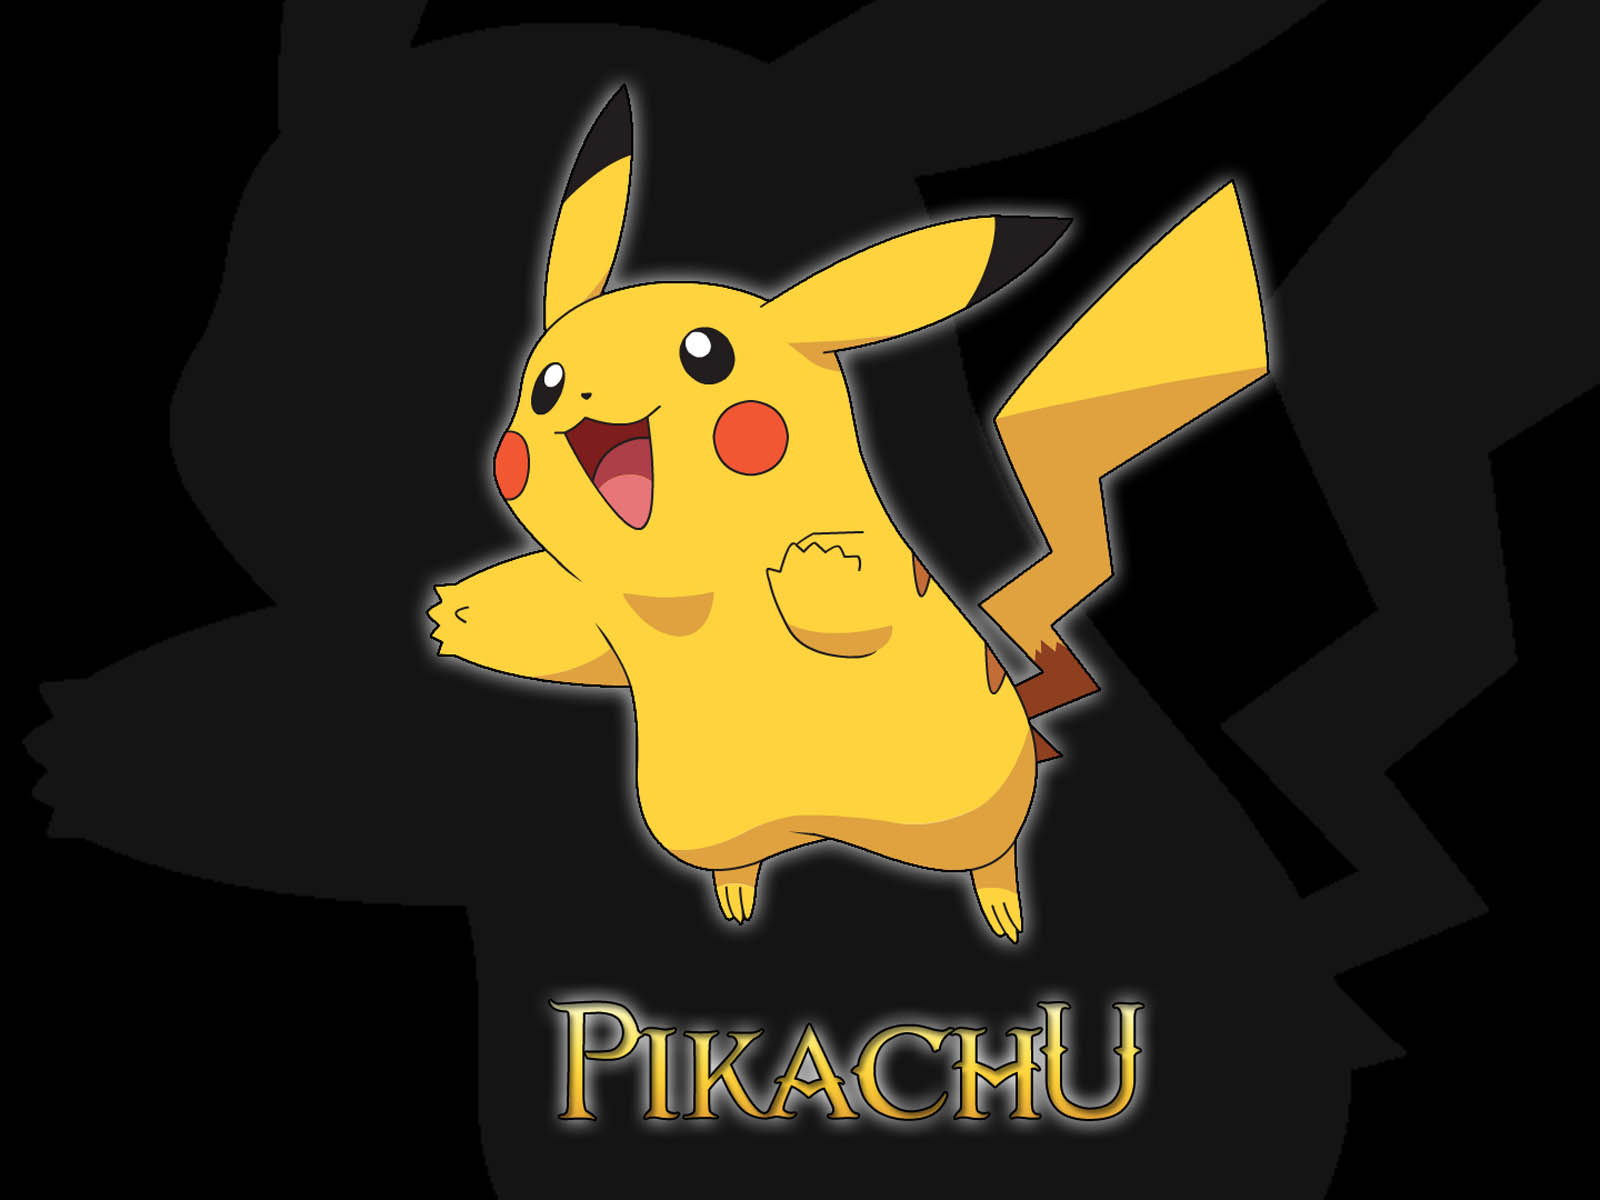 Pokemon Pikachu Wallpapers - WallpaperSafari